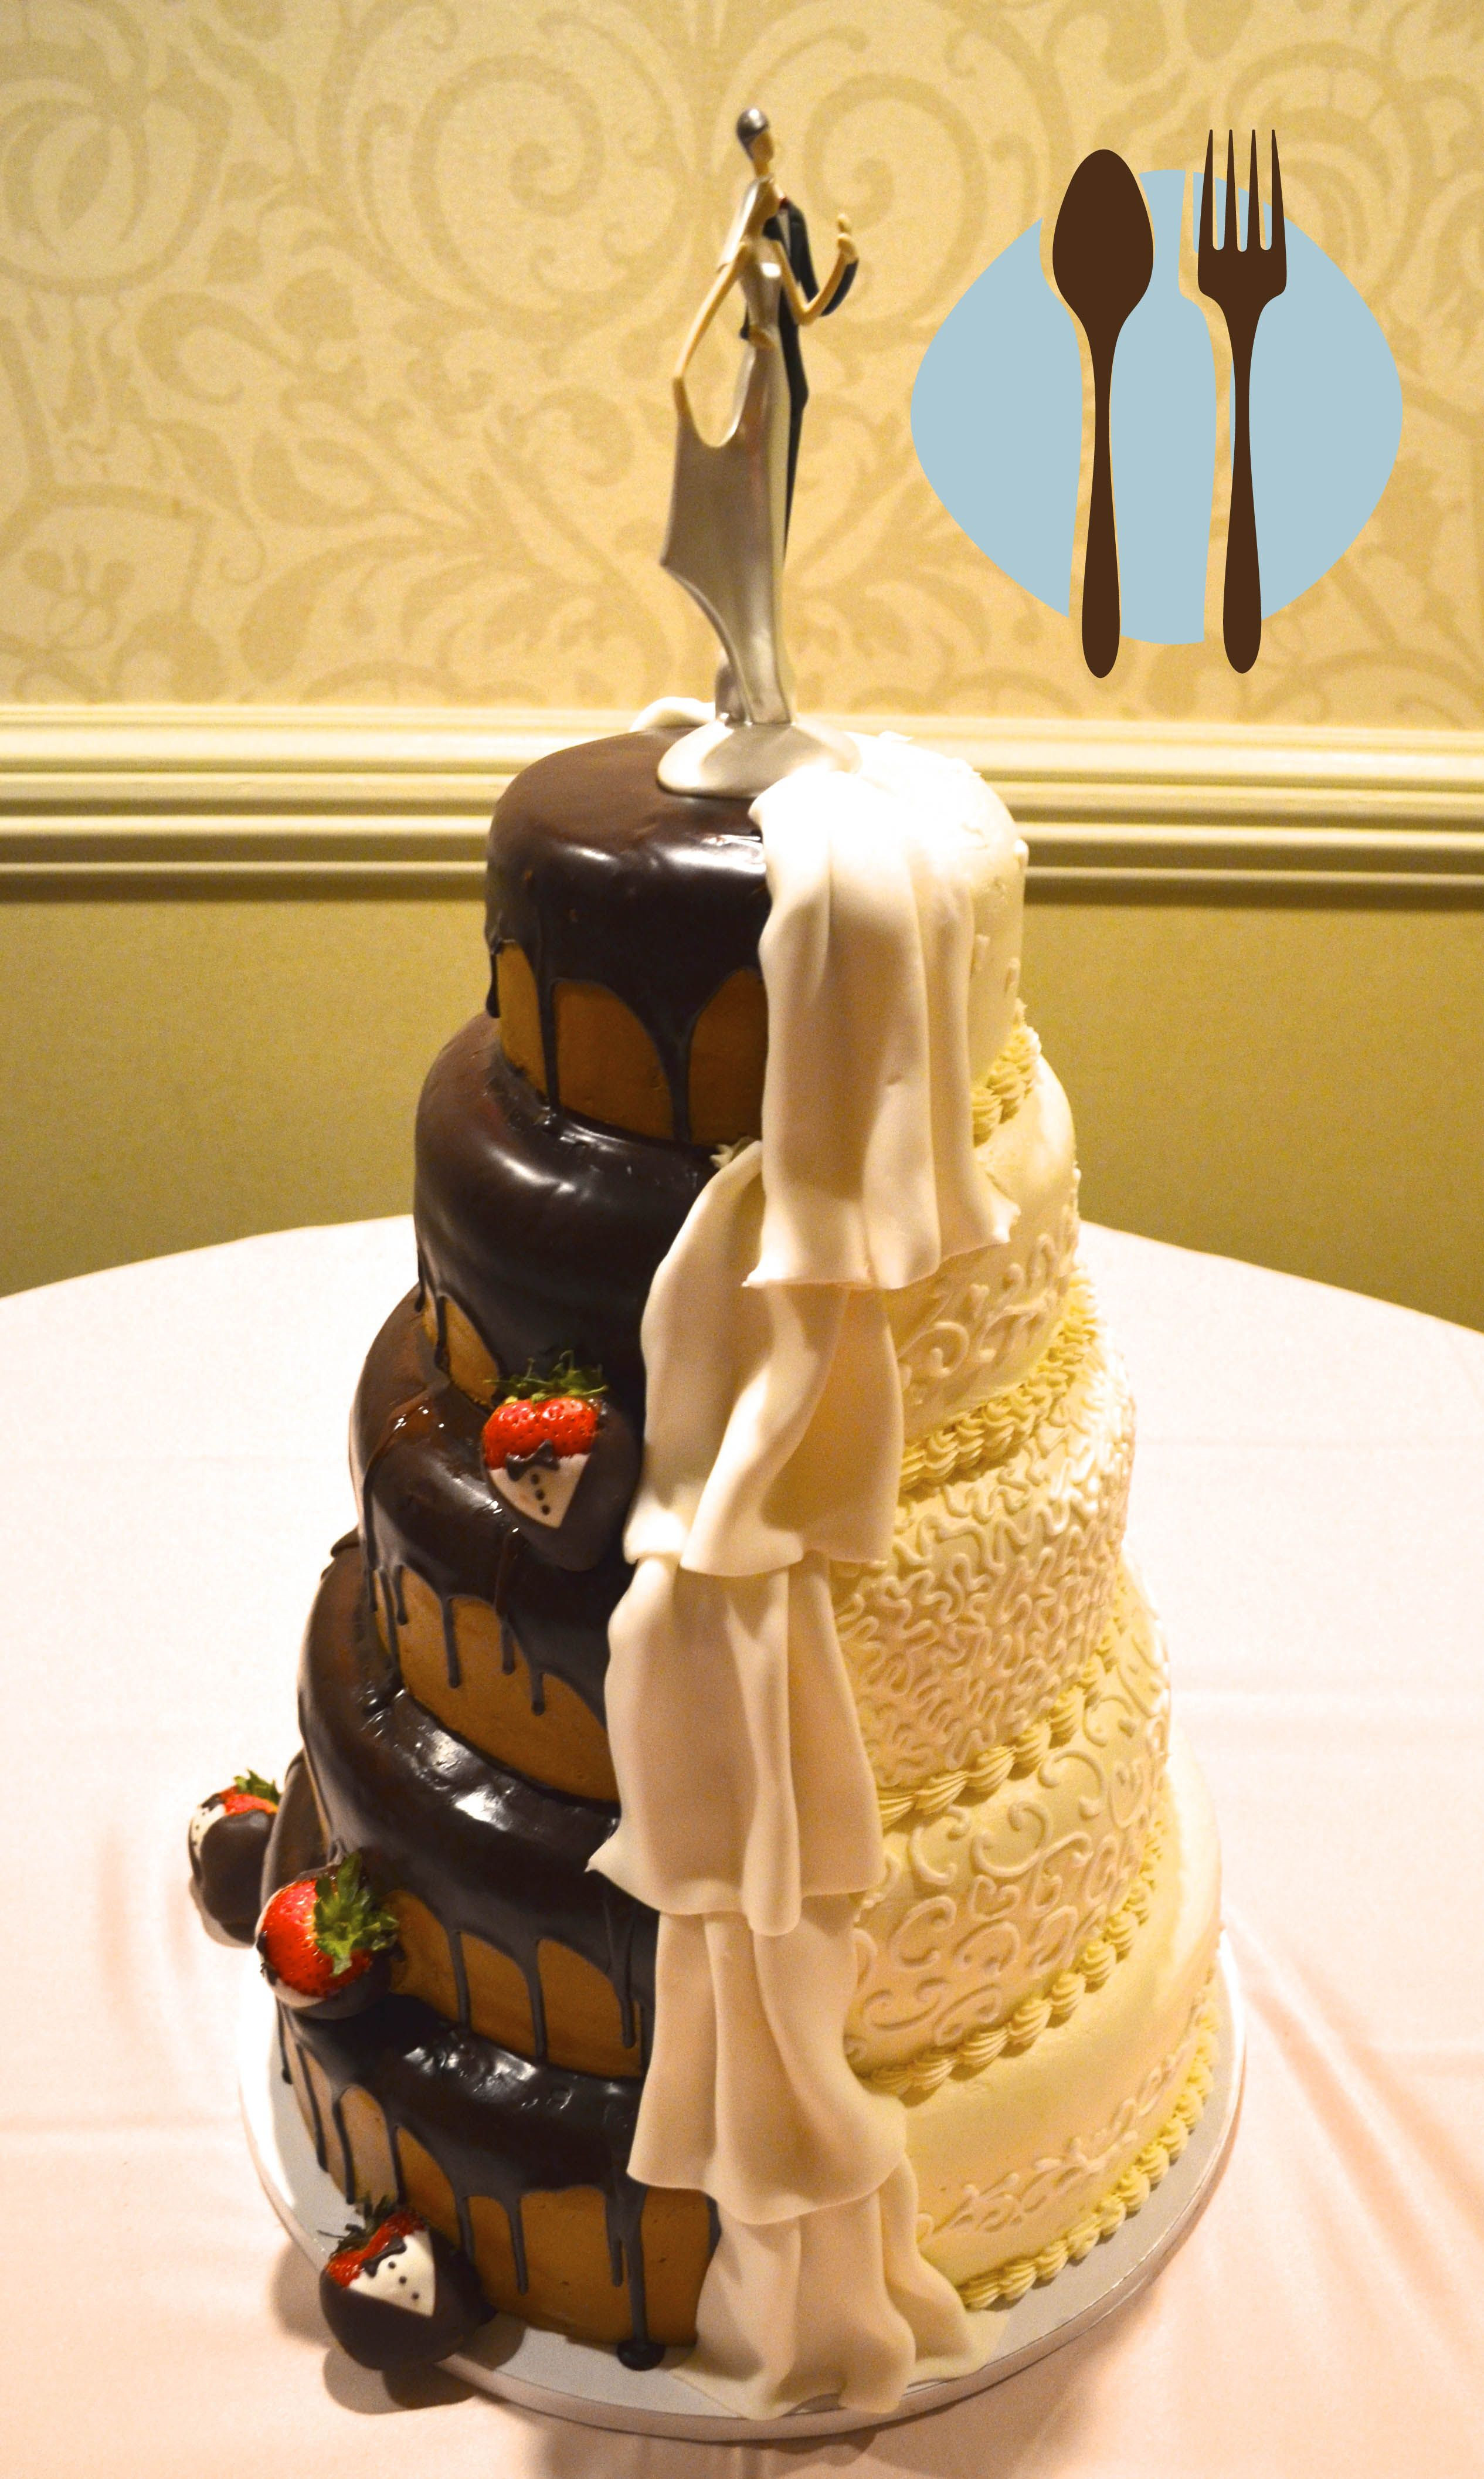 Chocolate And Vanilla Wedding Cakes
 Half chocolate half vanilla wedding cake His and hers